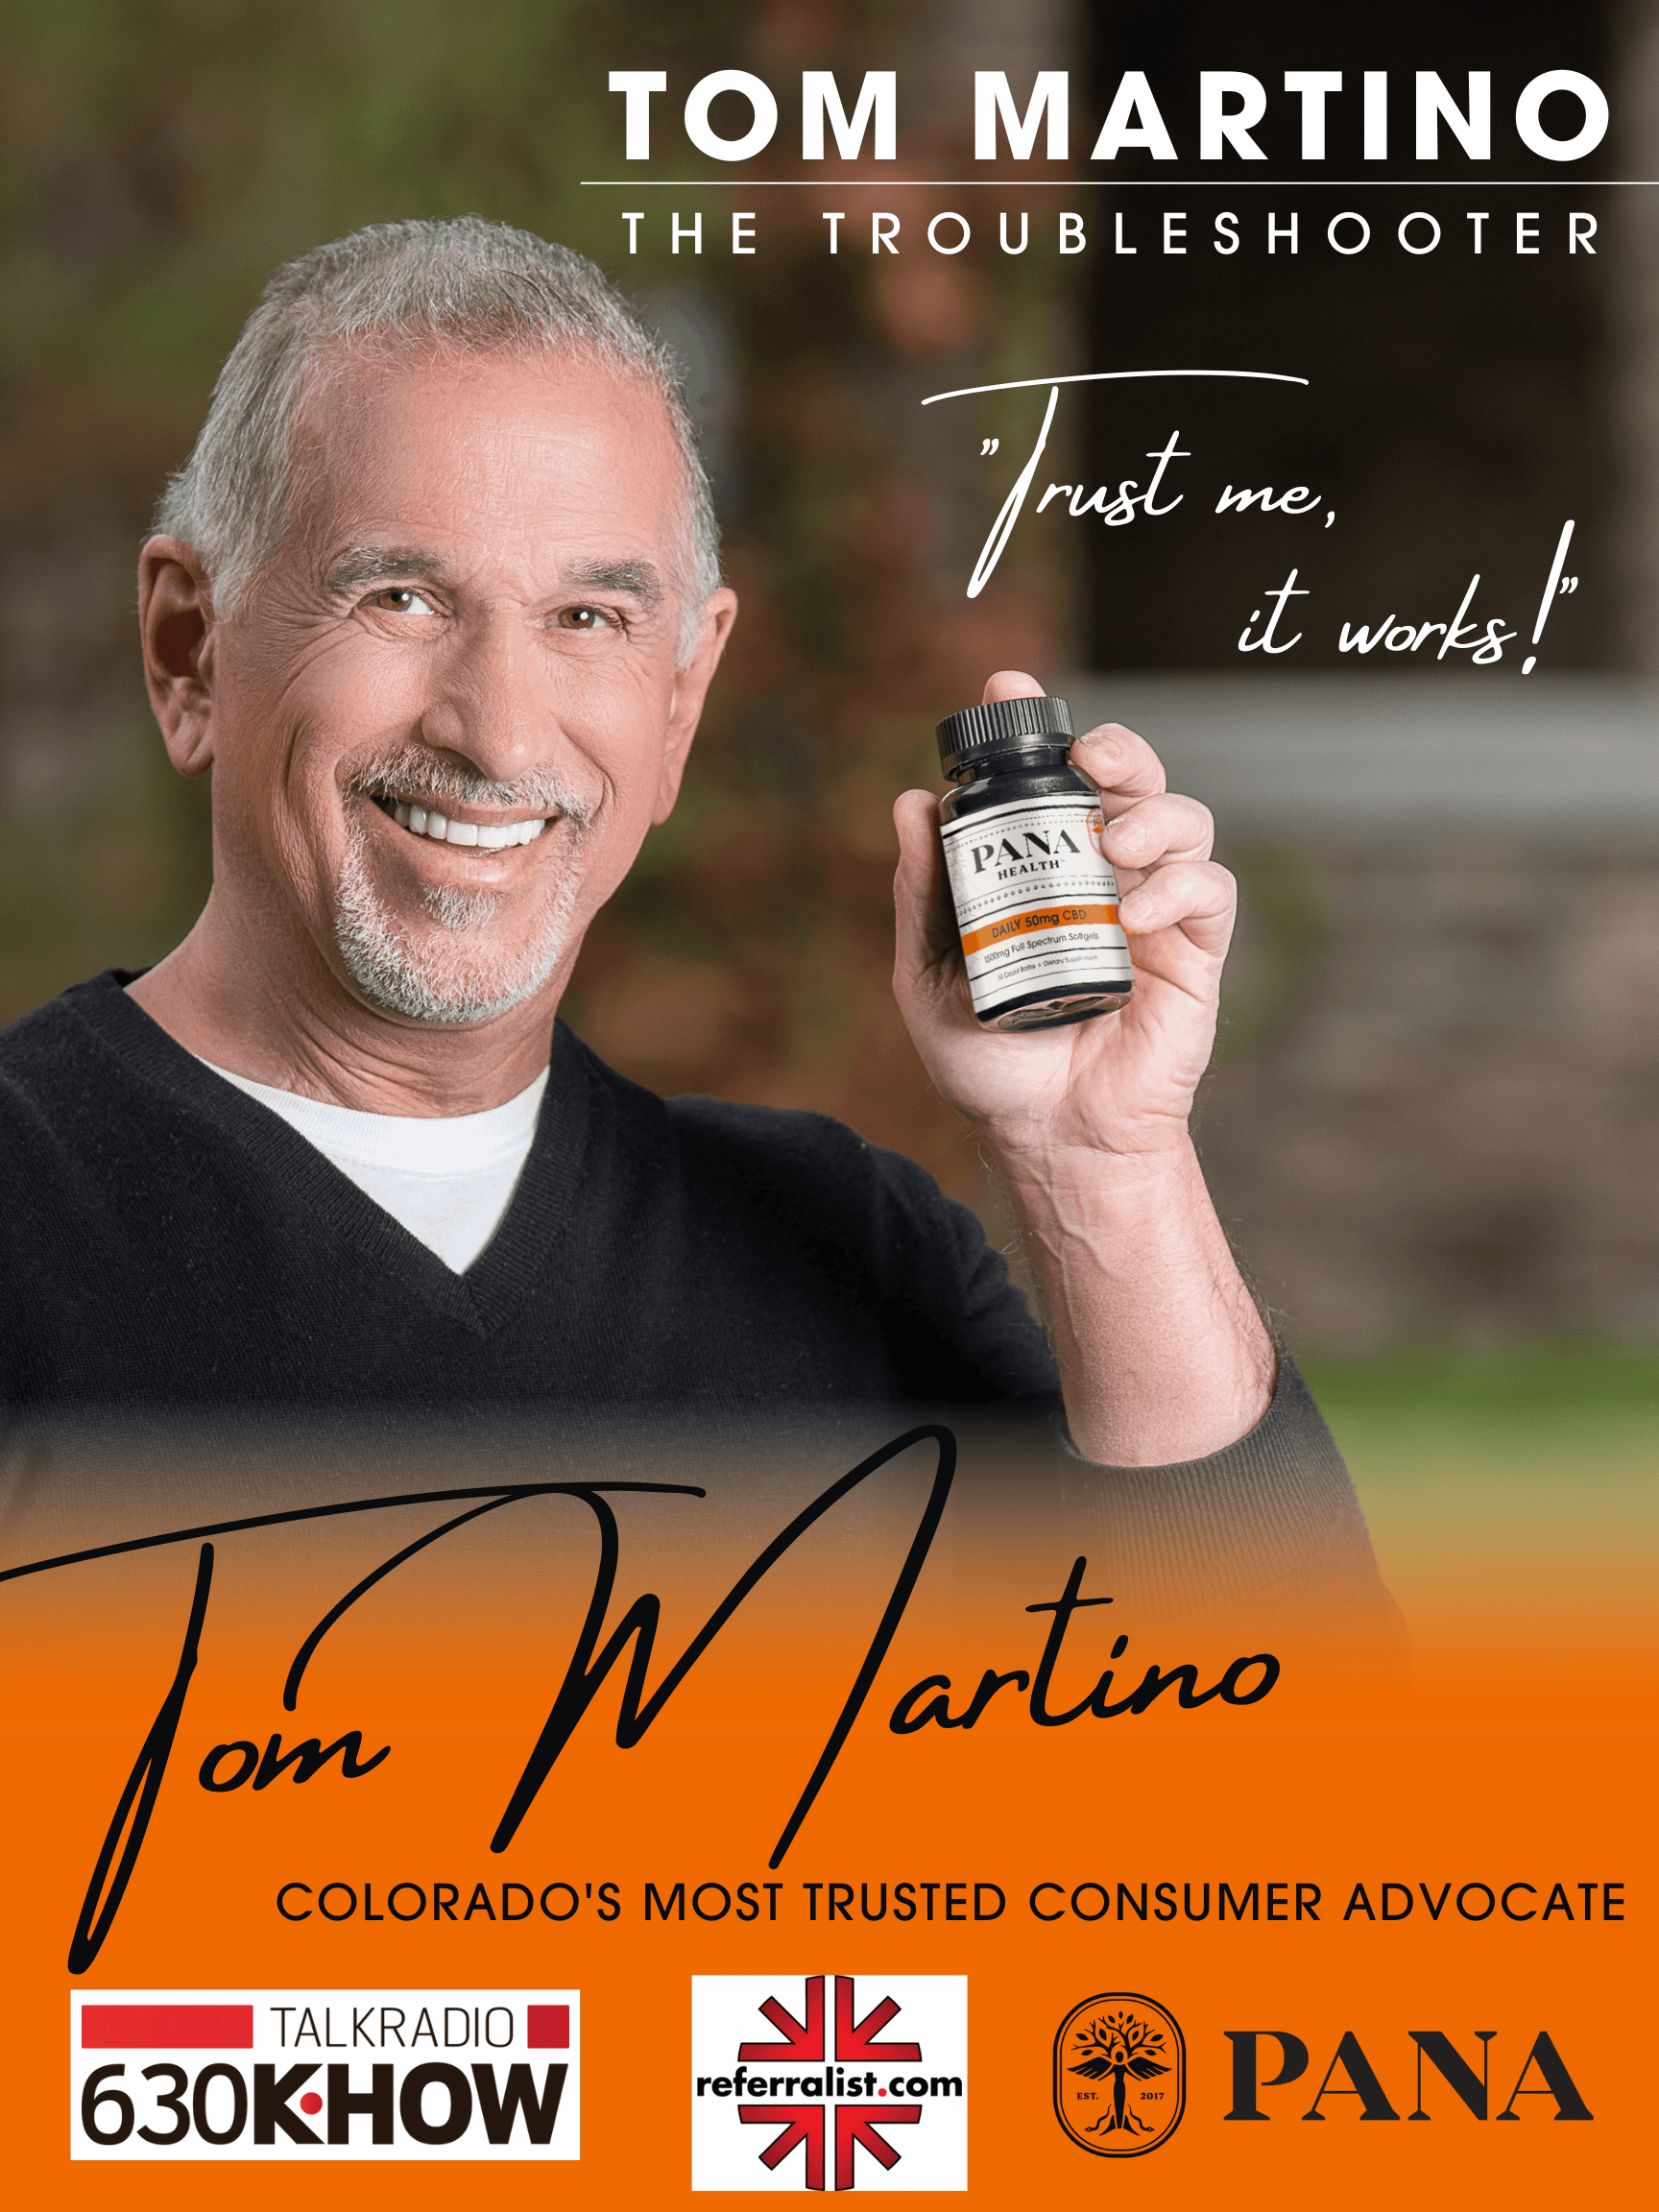 Tom Martino holding softgel product saying "it works!"